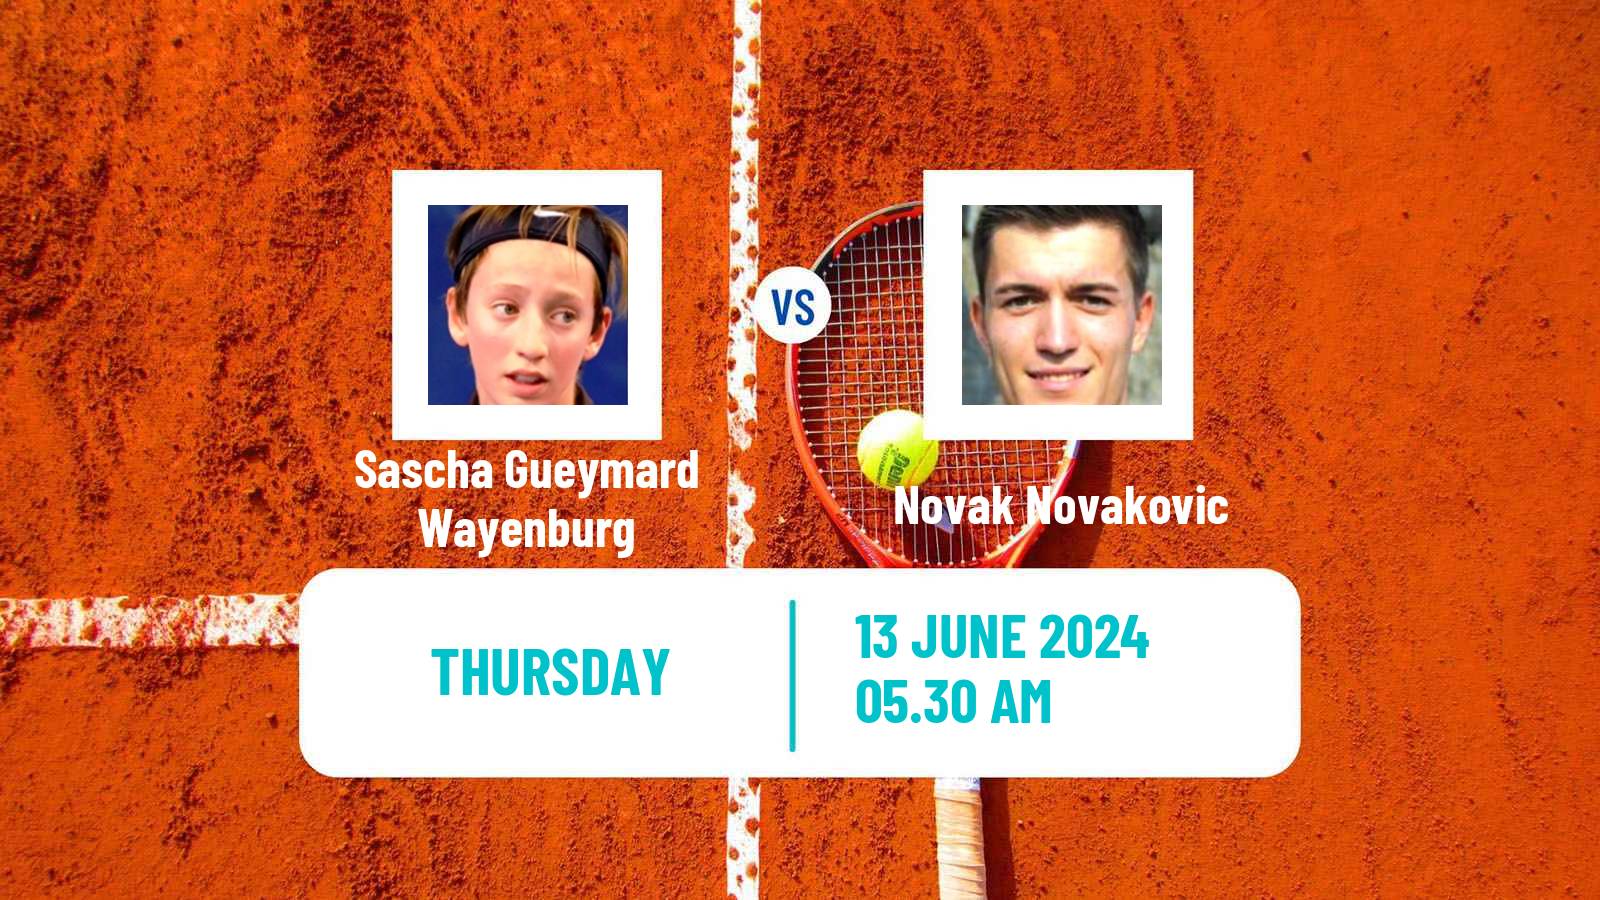 Tennis ITF M15 Kursumlijska Banja 7 Men Sascha Gueymard Wayenburg - Novak Novakovic